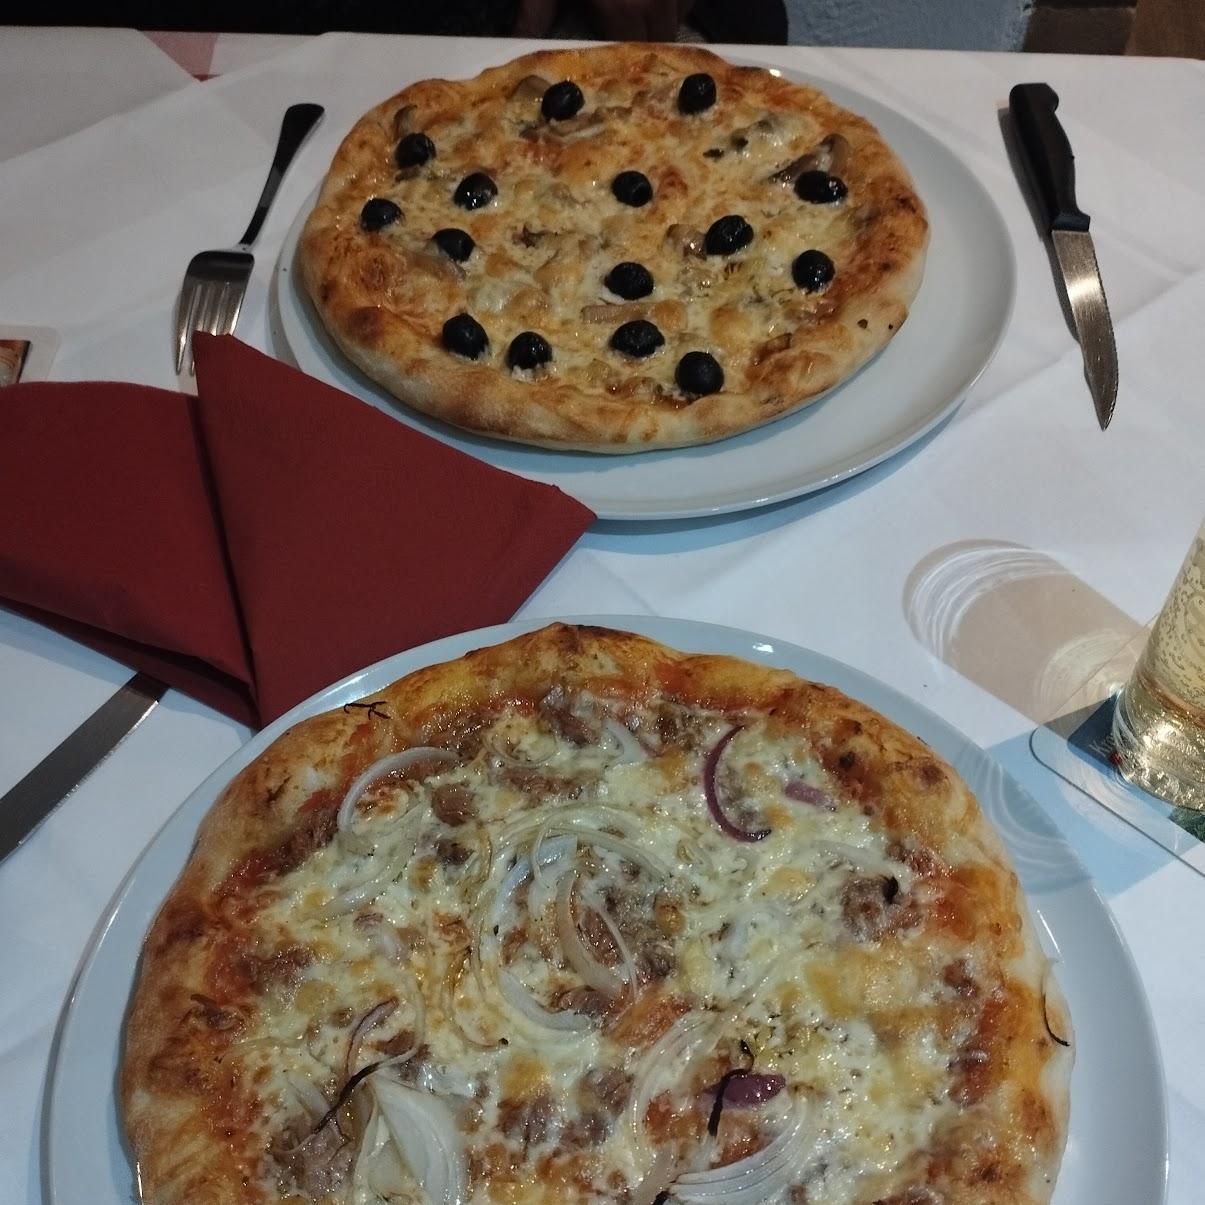 Restaurant "Pizzeria La" in Beckum